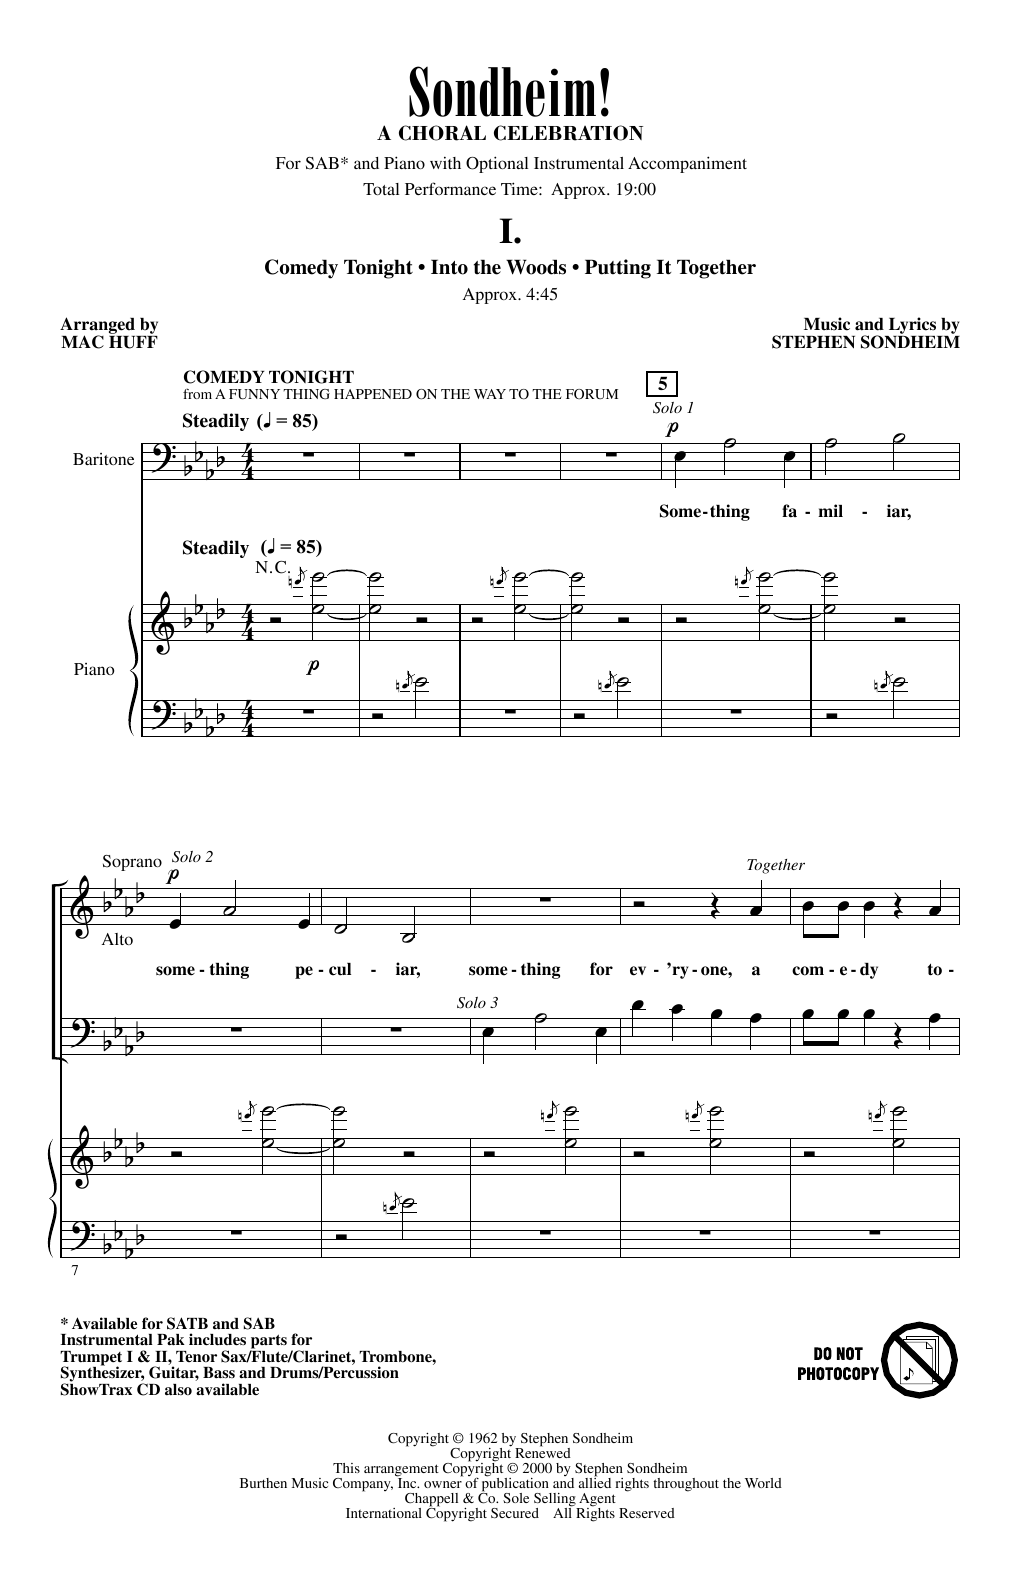 Stephen Sondheim Sondheim! A Choral Celebration (Medley) (arr. Mac Huff) sheet music notes and chords arranged for SATB Choir